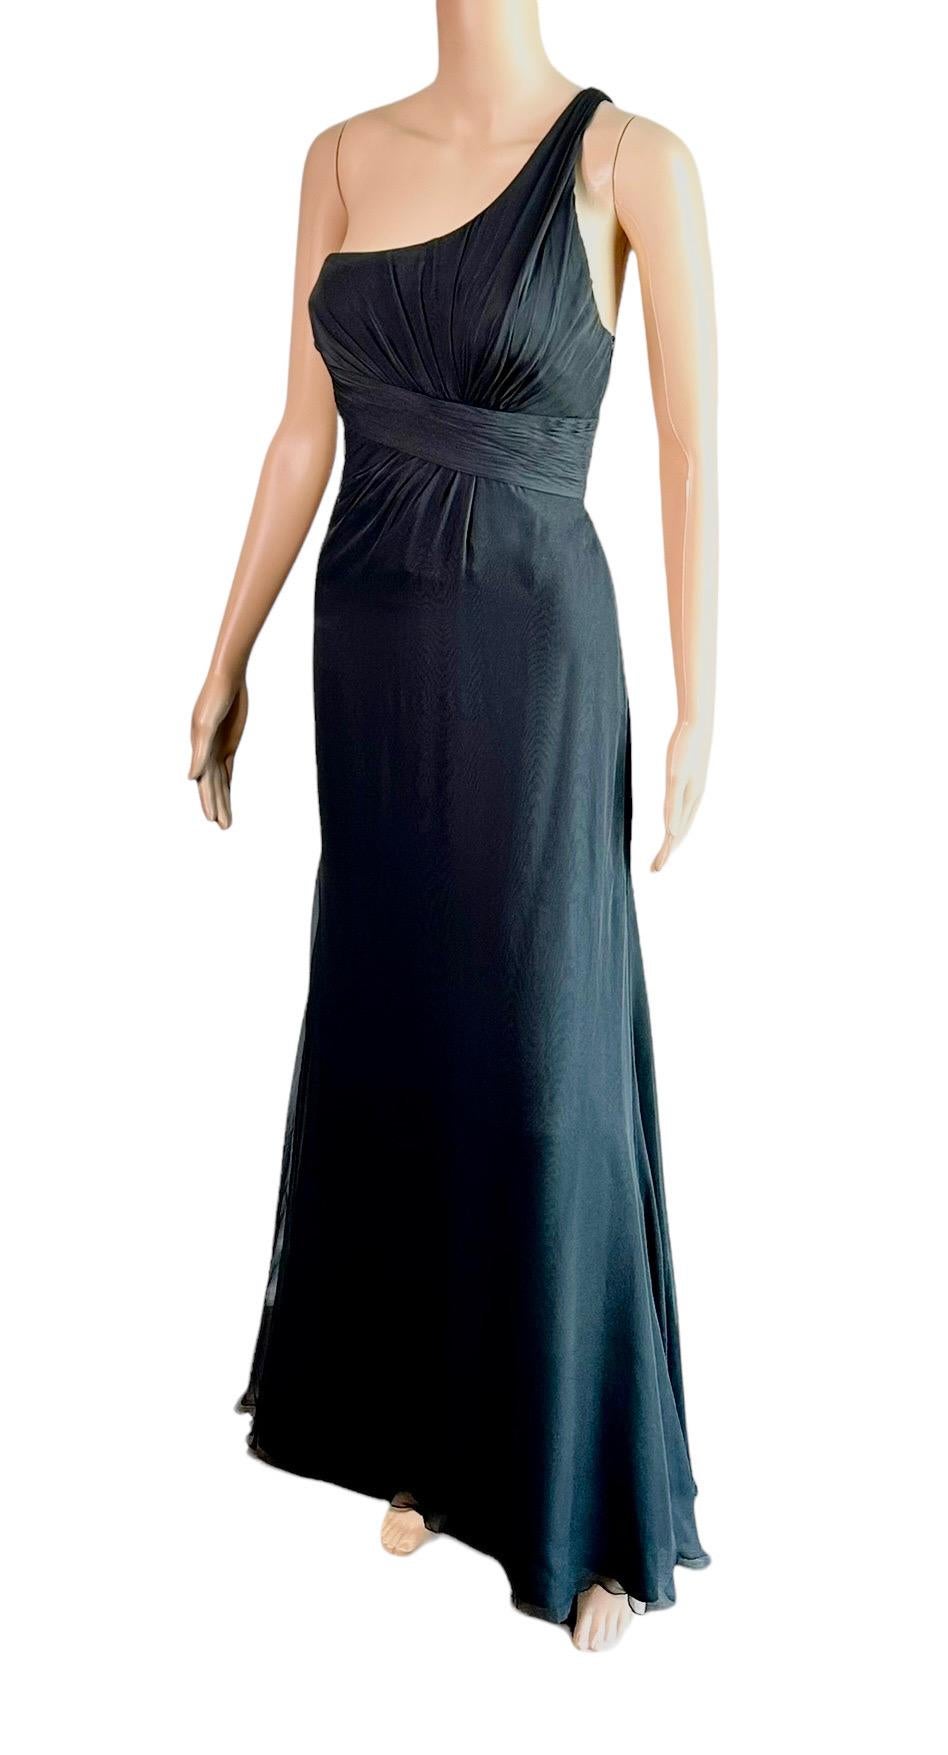 Versace F/W 2006 Bustier One Shoulder Black Evening Dress IT 42

FOLLOW US ON INSTAGRAM @OPULENTADDICT